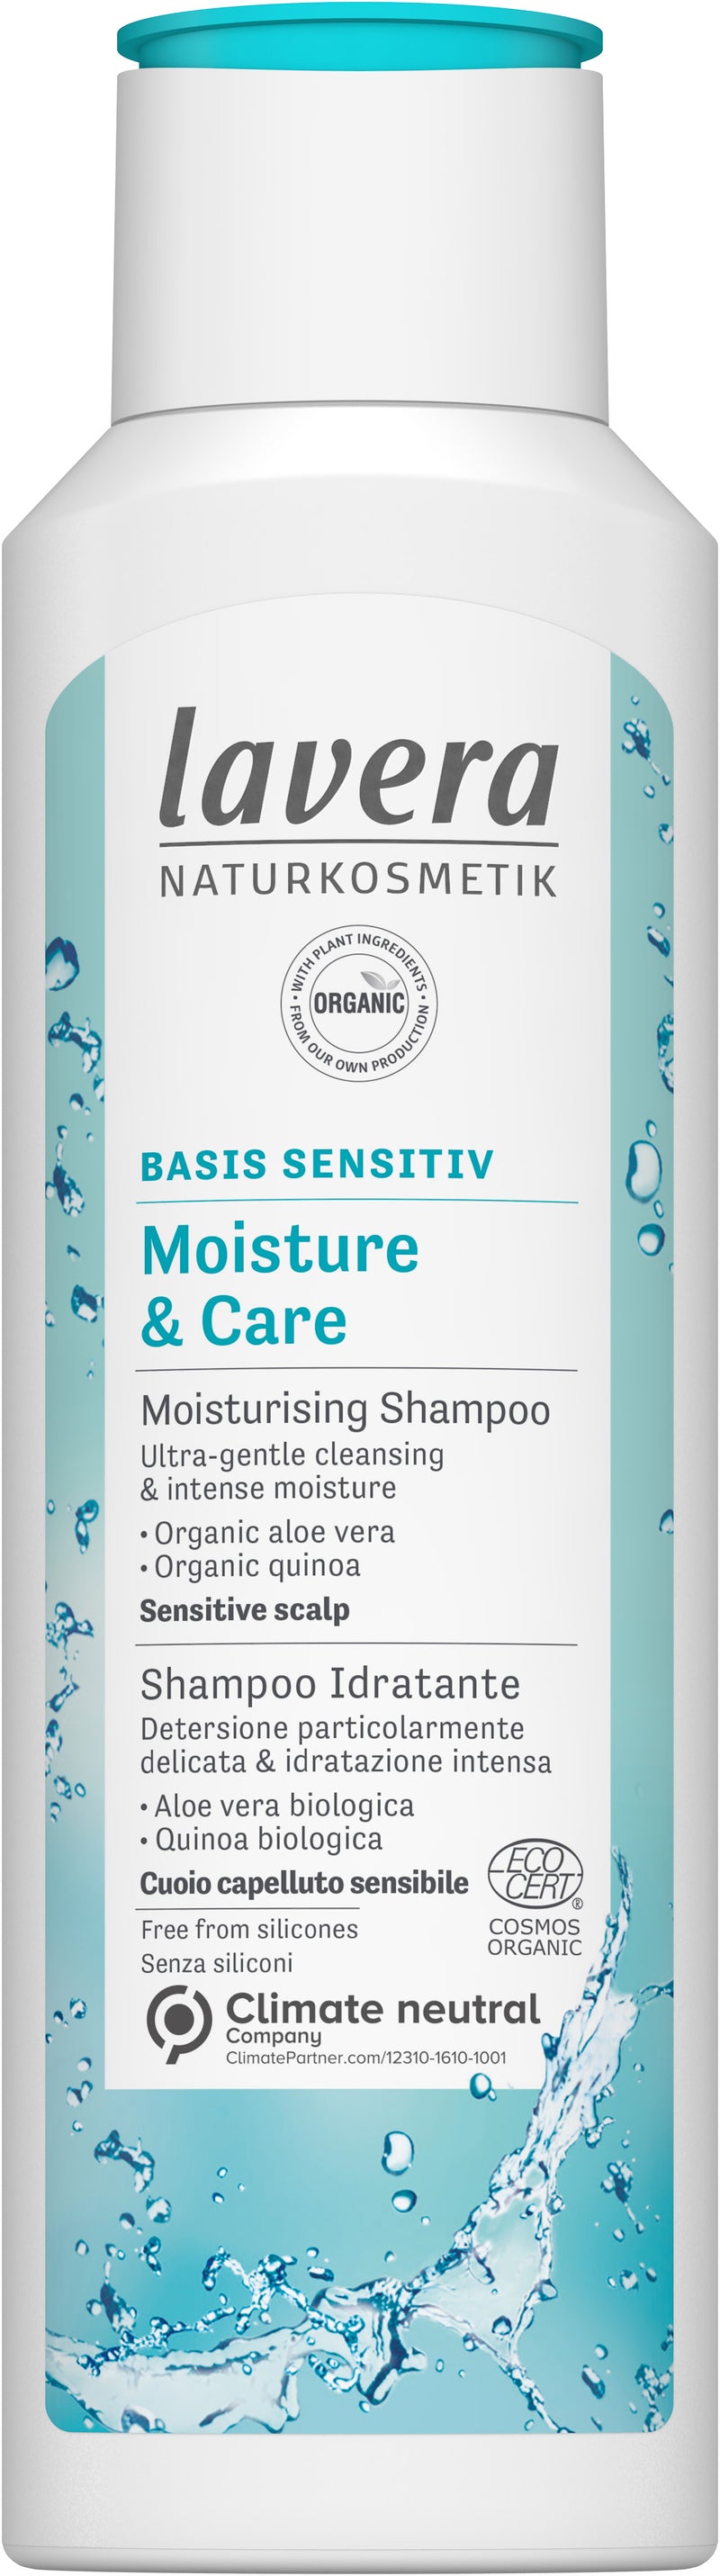 Lavera Basis Sensitive Moisture & Care Organic Shampoo - 250ml - For Sensitive Scalp